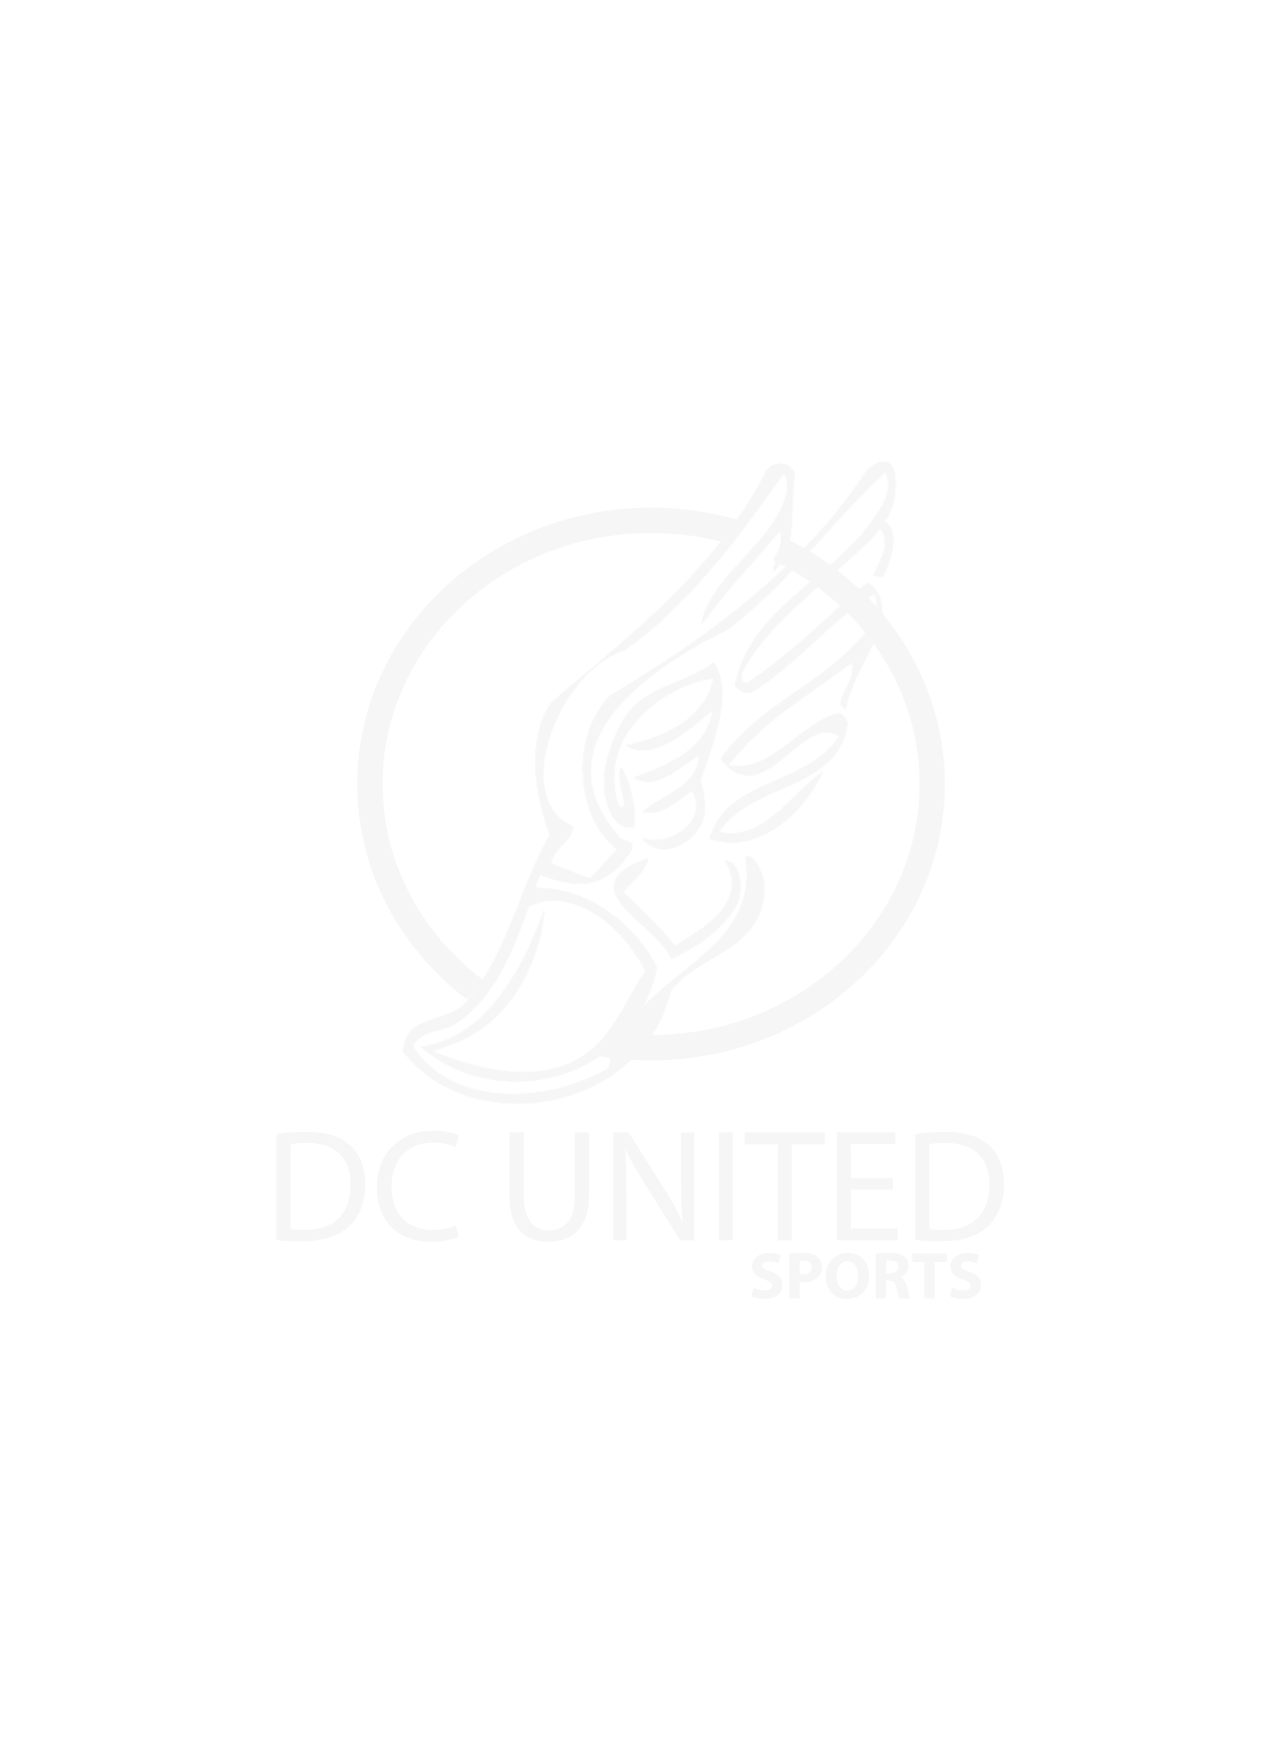 DC United Sports's logo